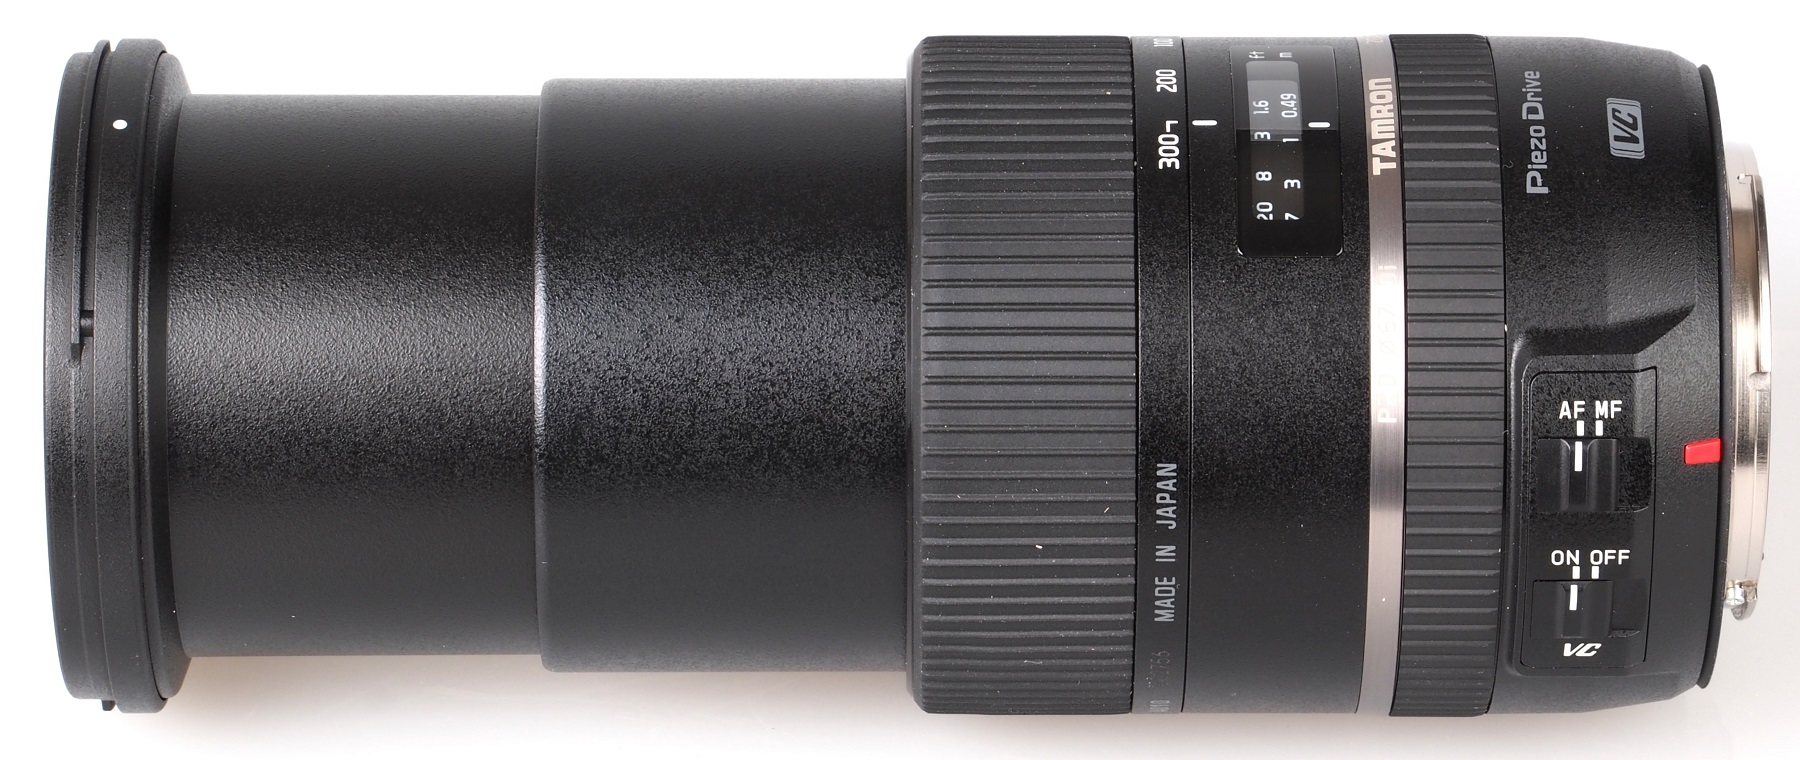 Tamron 28-300mm f/3.5-6.3 Di VC PZD Lens Review